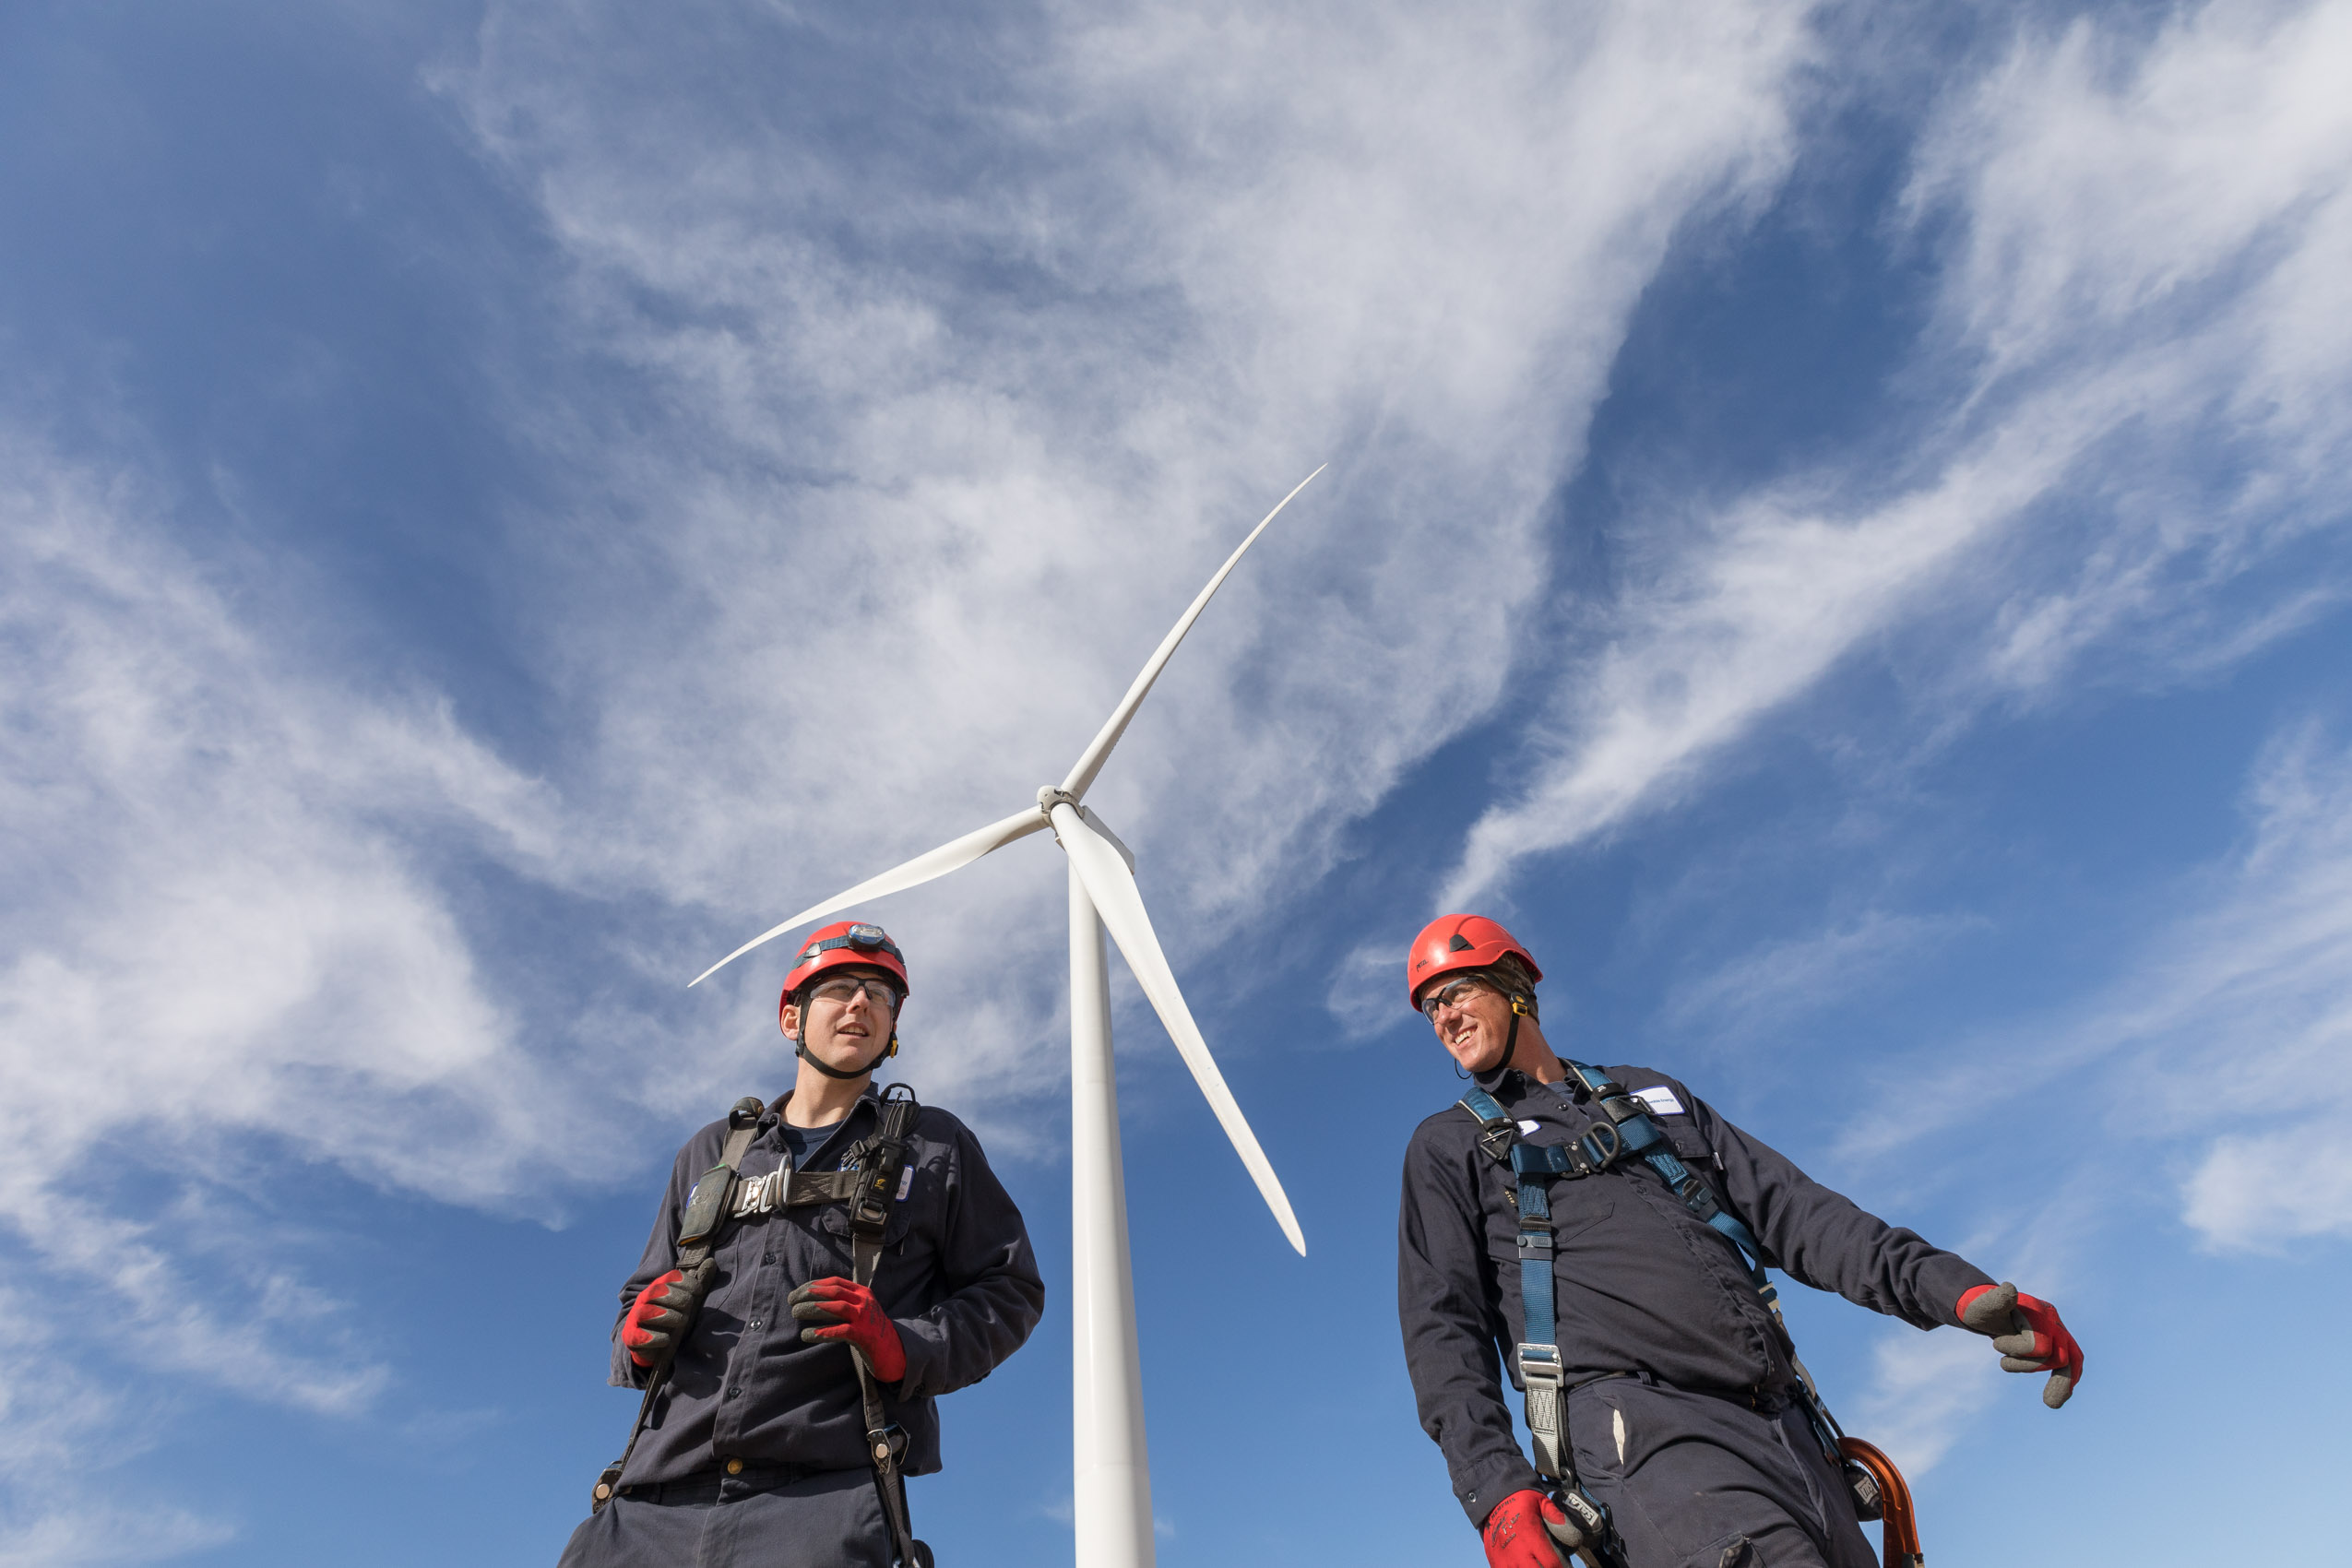 Two Amazon Wind techs walking below wind turbine smiling with safety gear on.